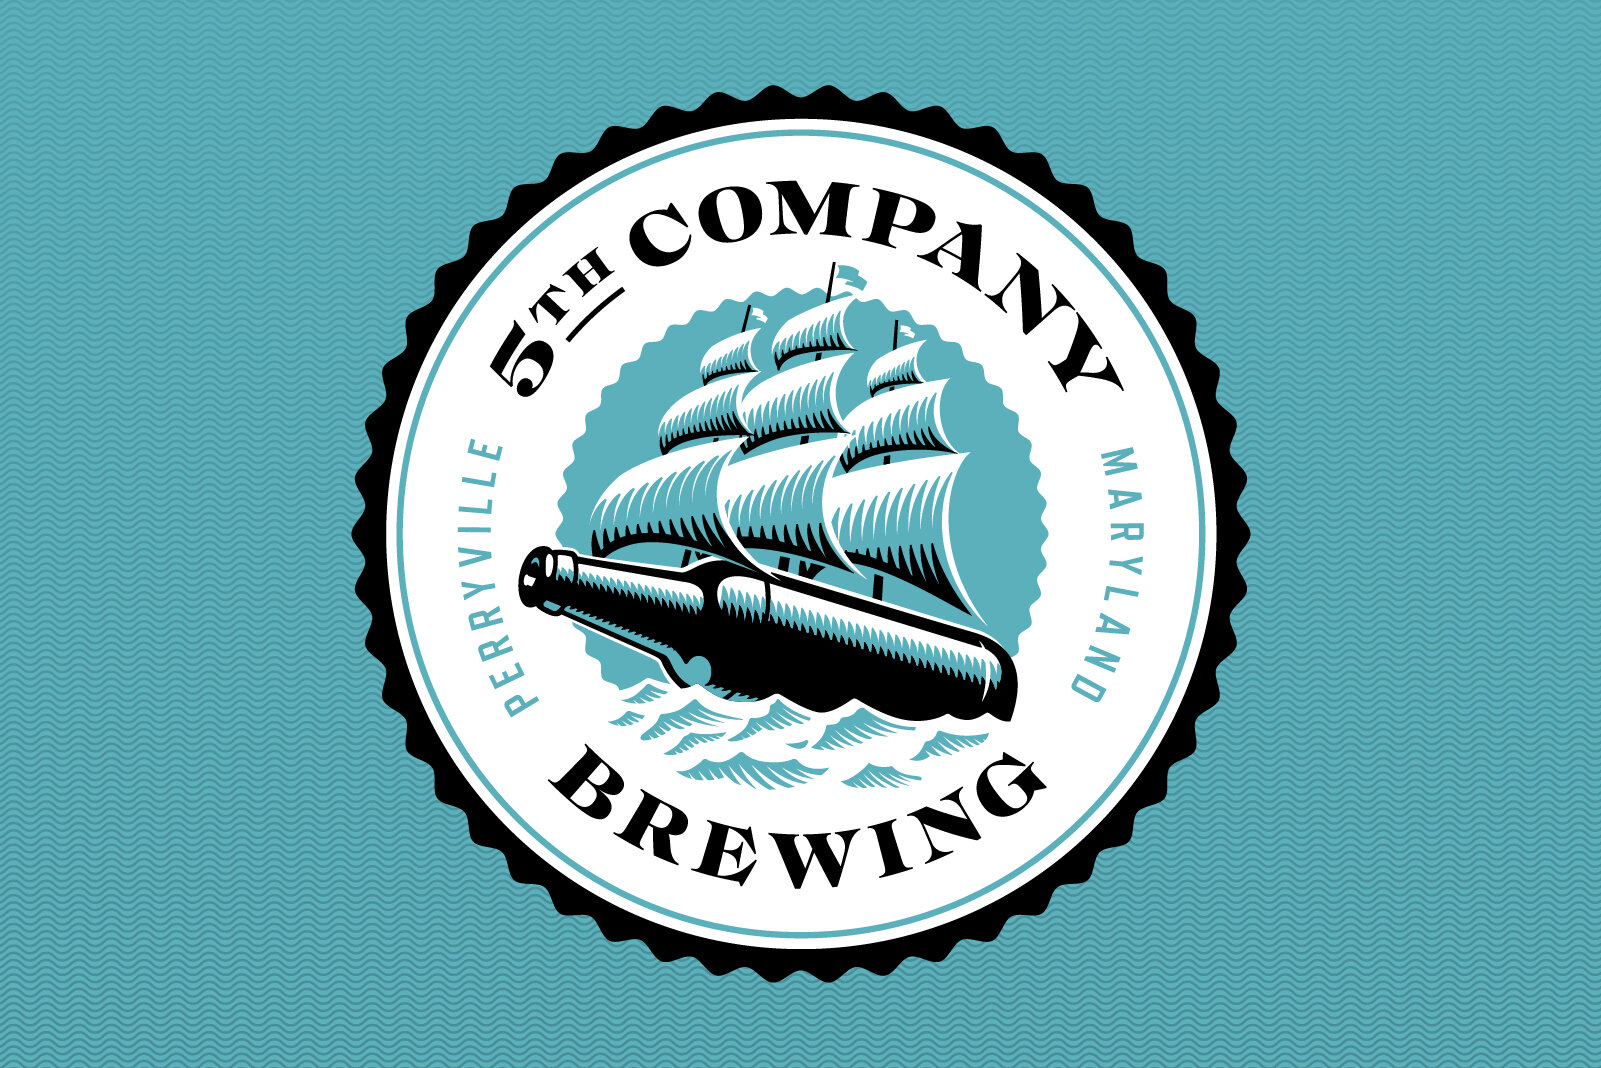 5th Company Brewing Logo_website.jpg